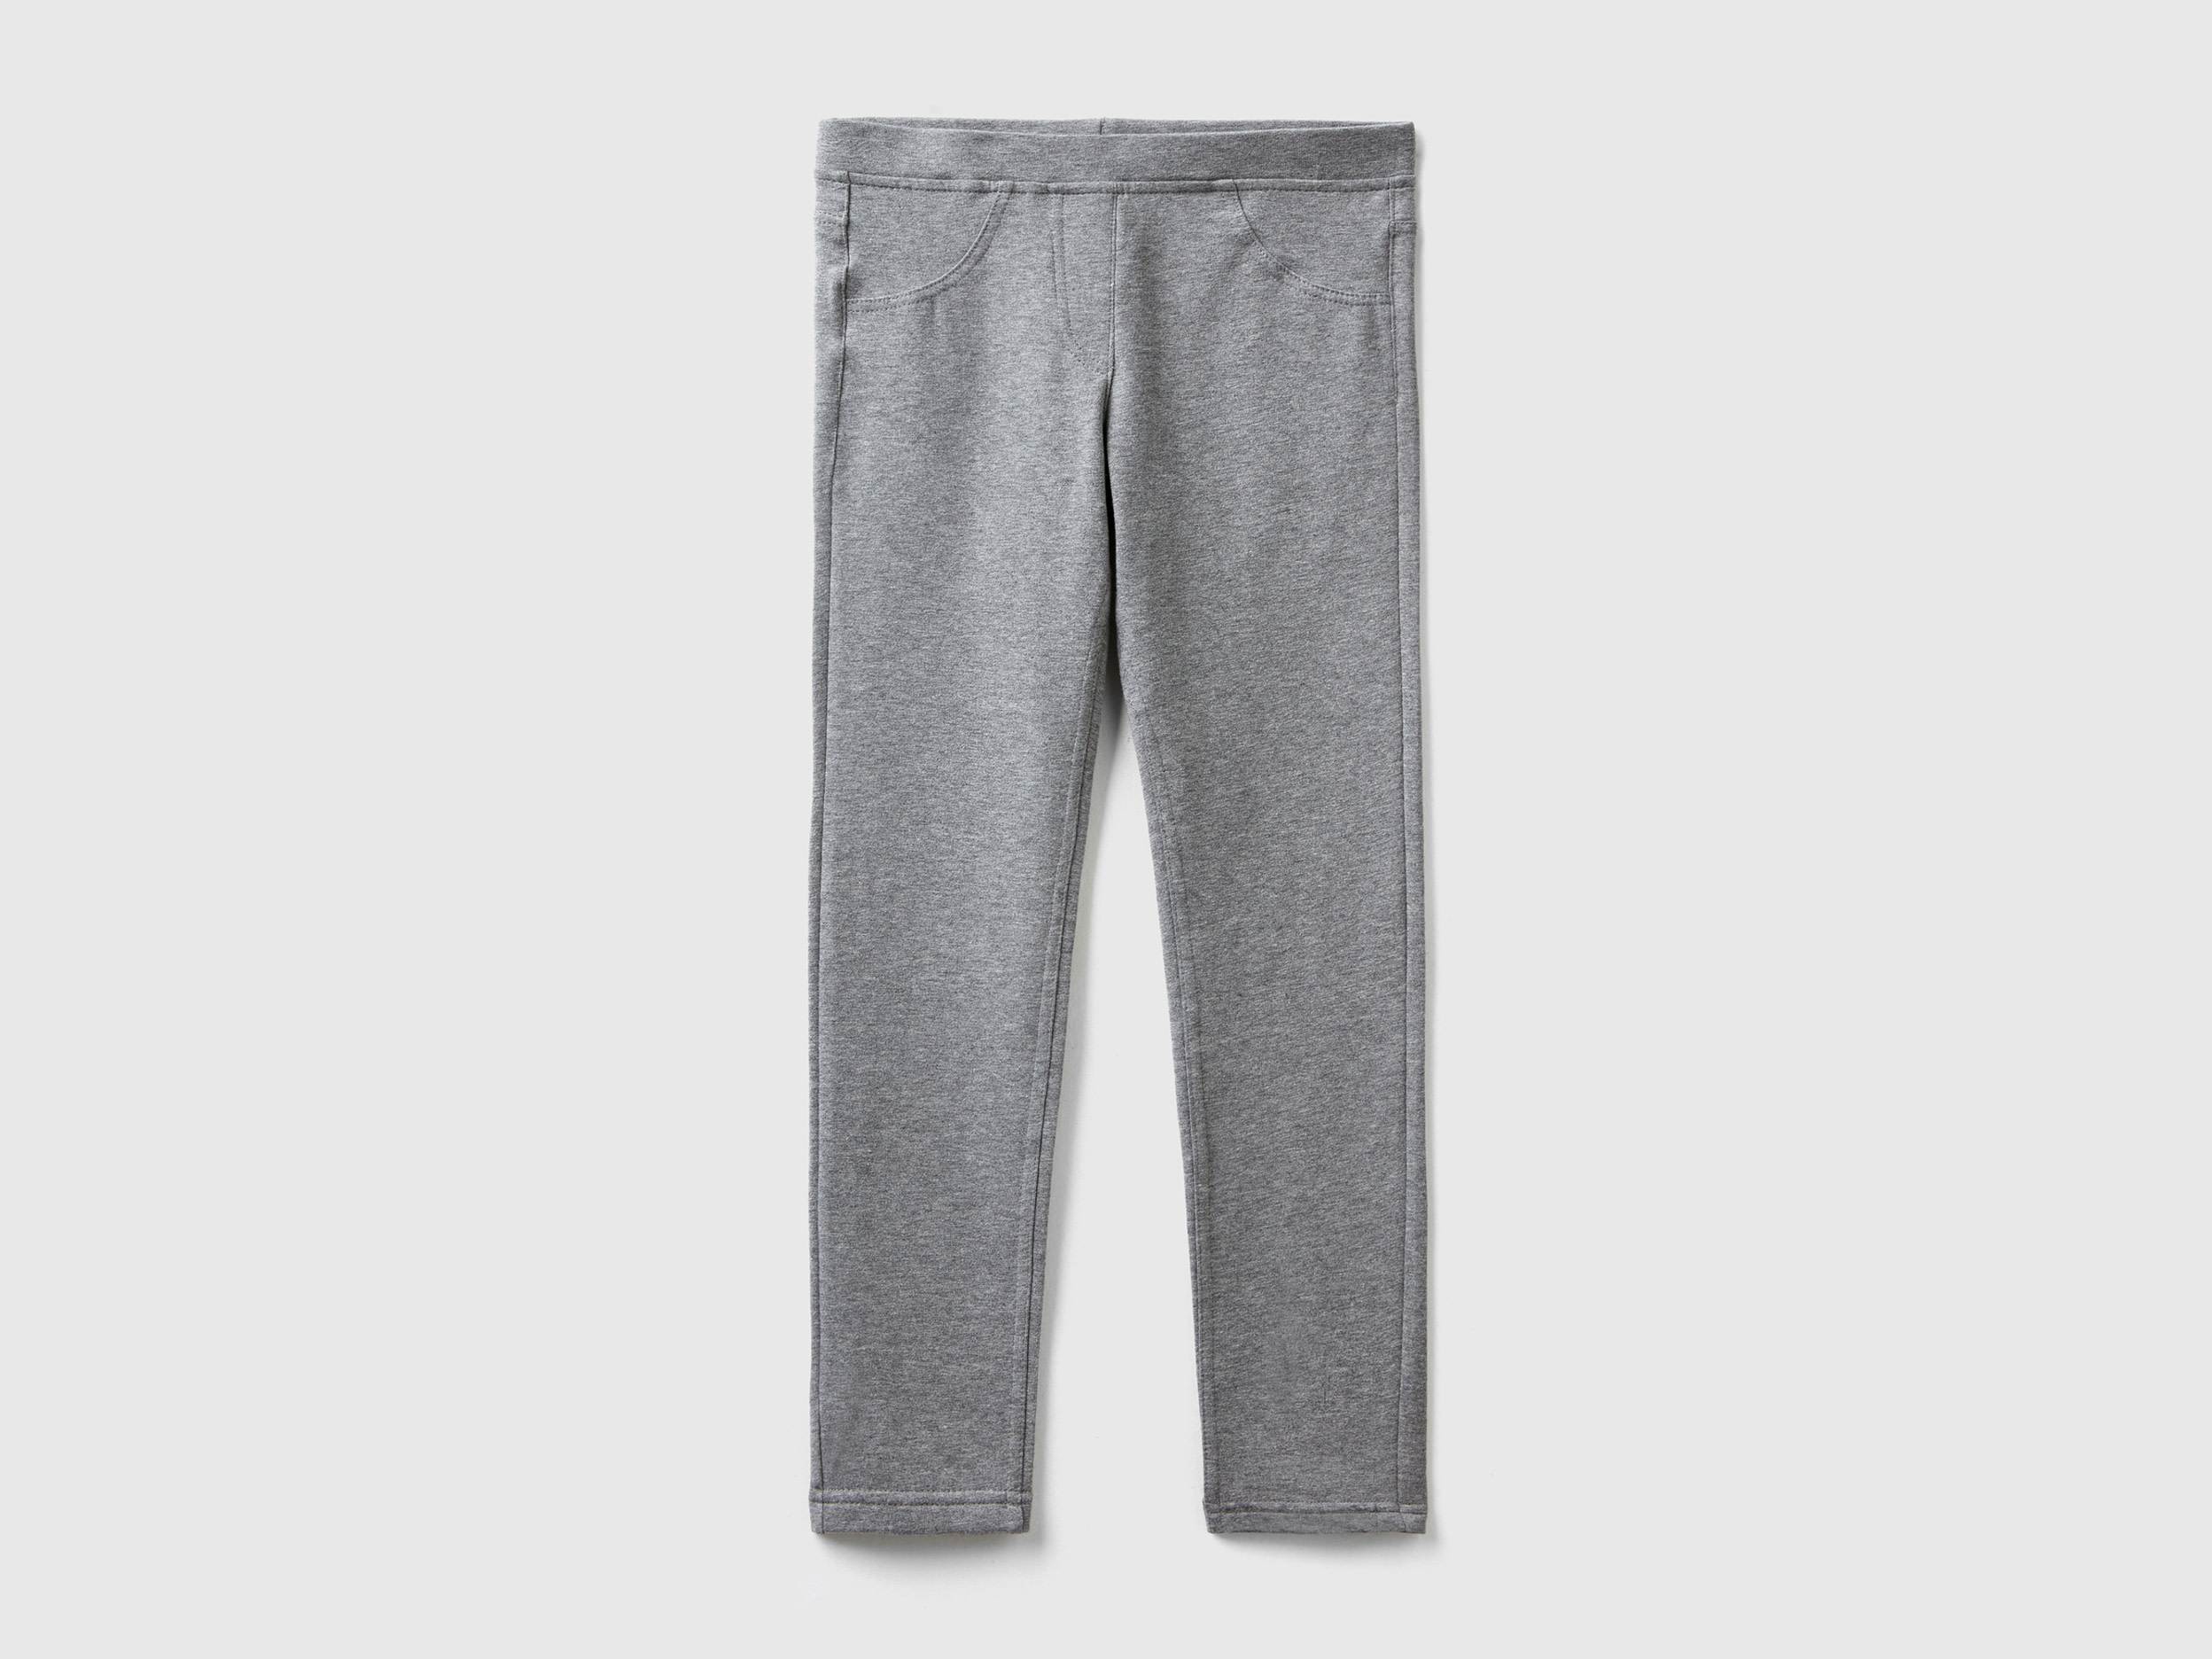 Benetton, Stretch Sweat Fabric Jeggings, size 3XL, Dark Gray, Kids